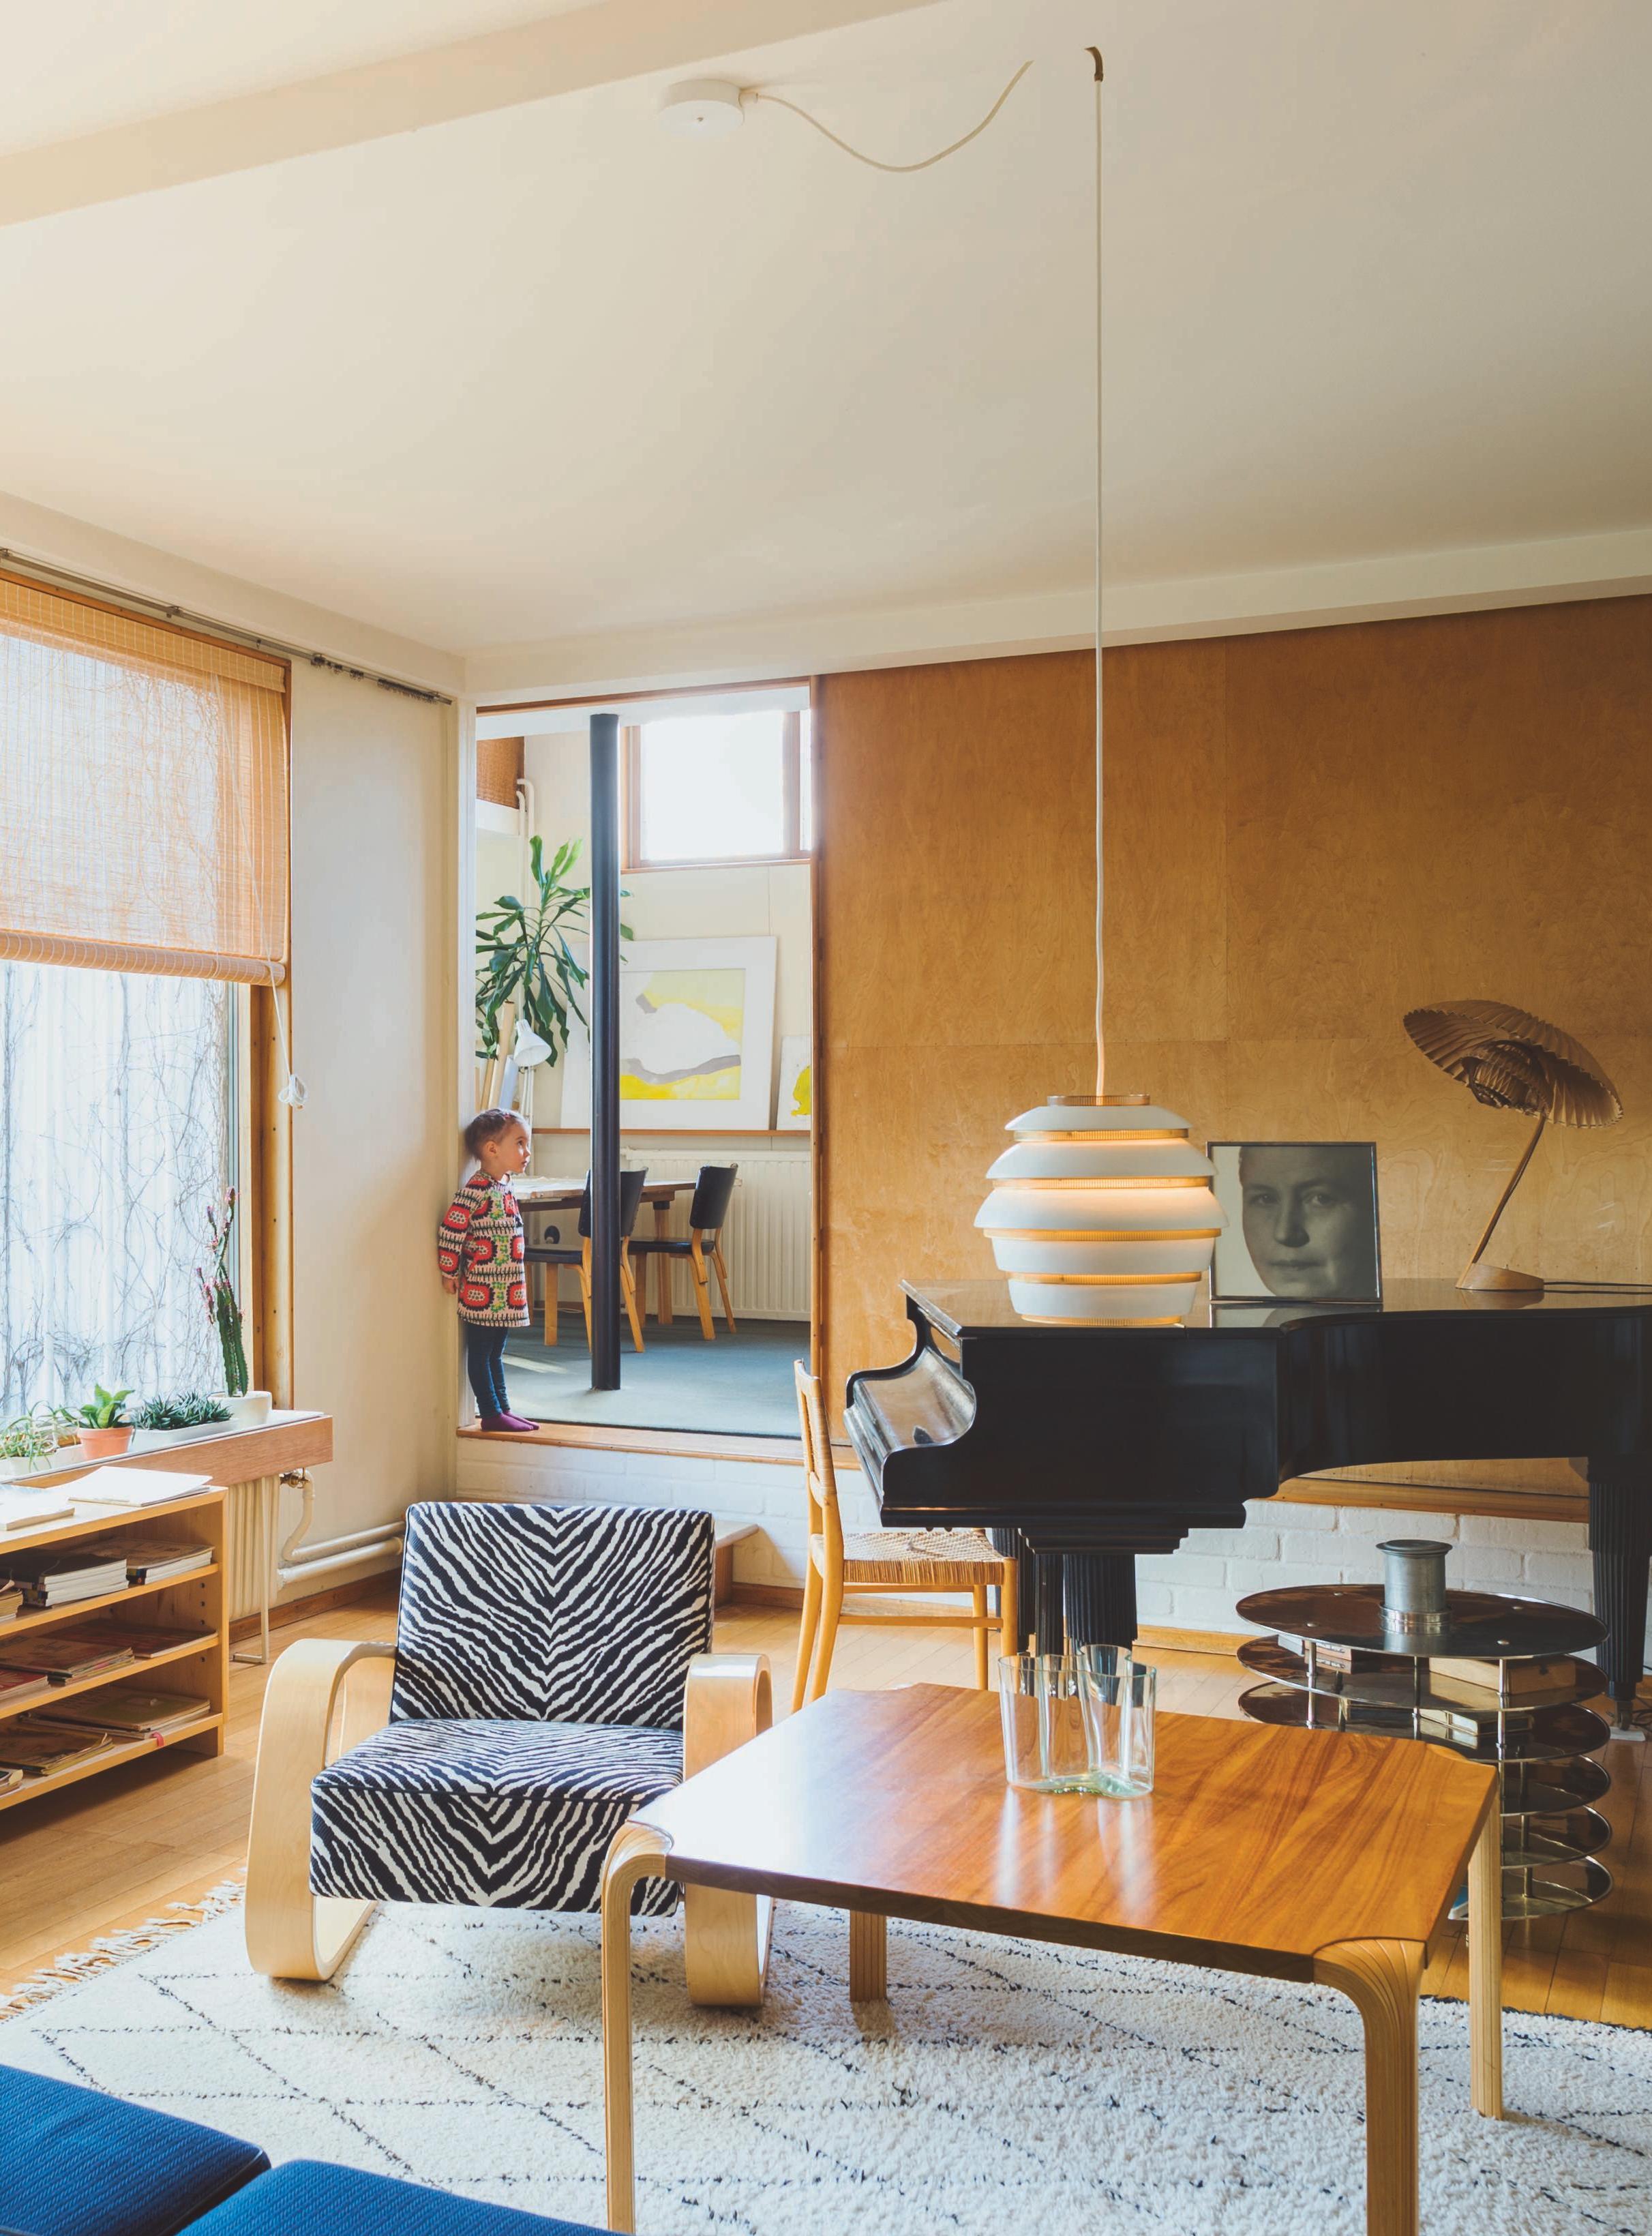 The interiors of the Aalto House living room in Munkkiniemi, Helsinki